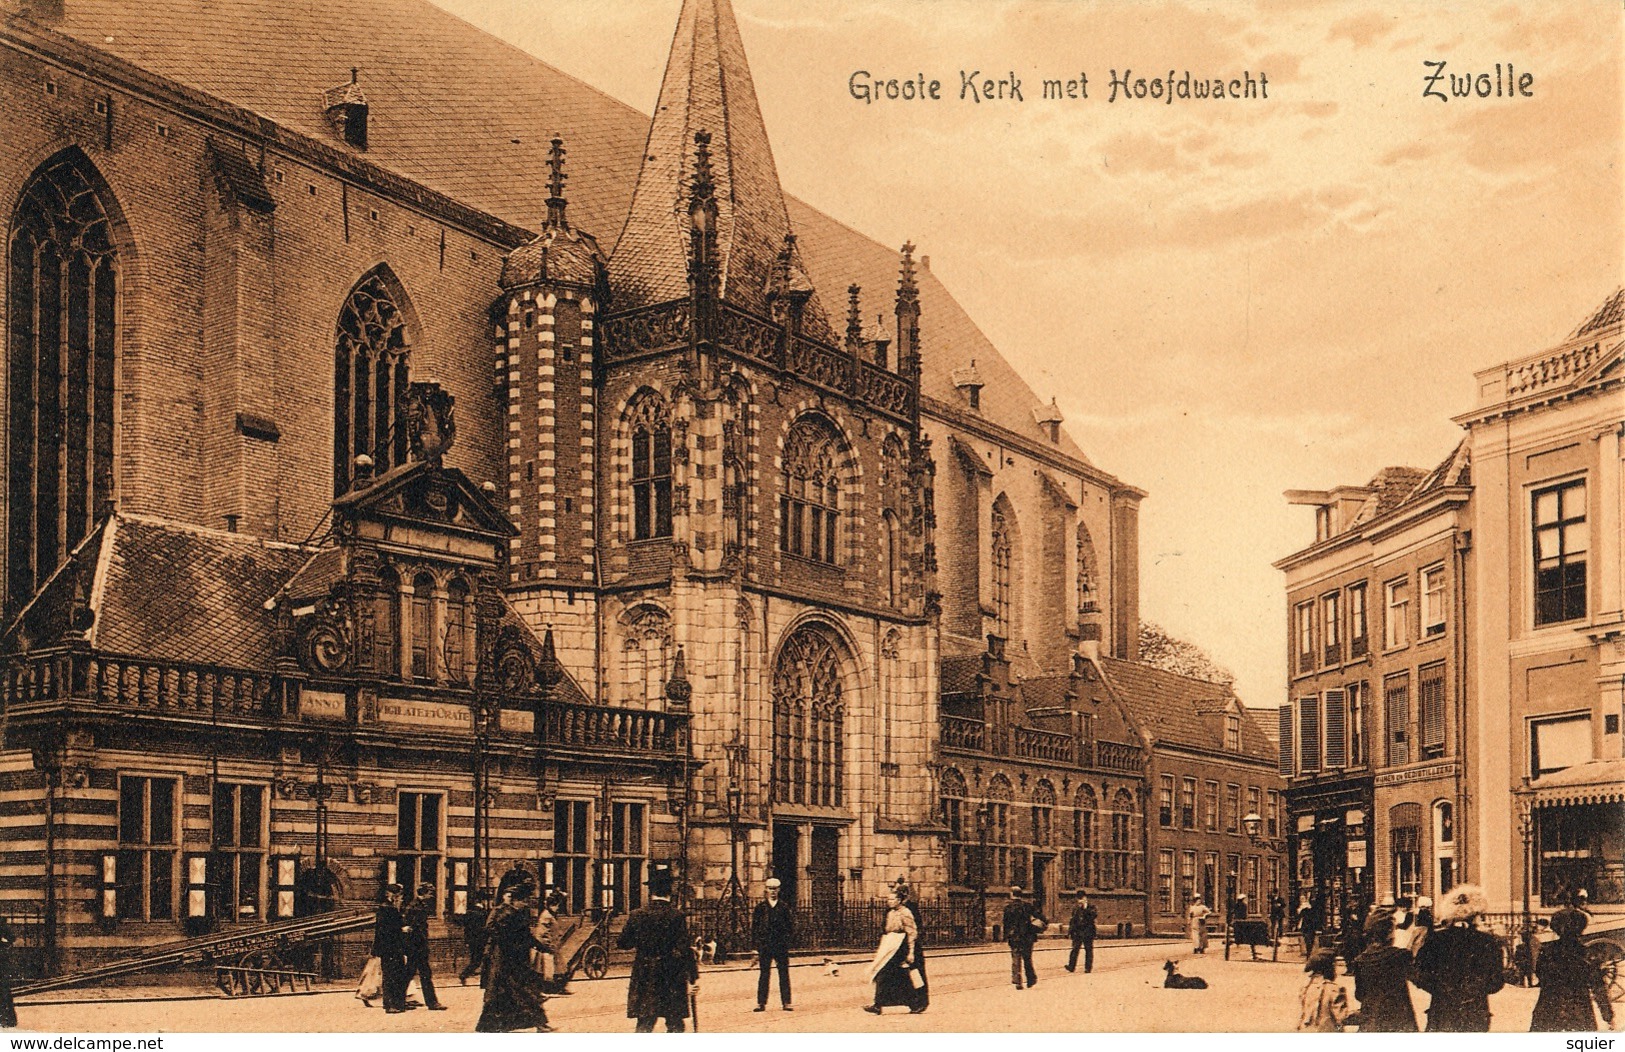 Groote Kerk, Hoofdwacht - Zwolle